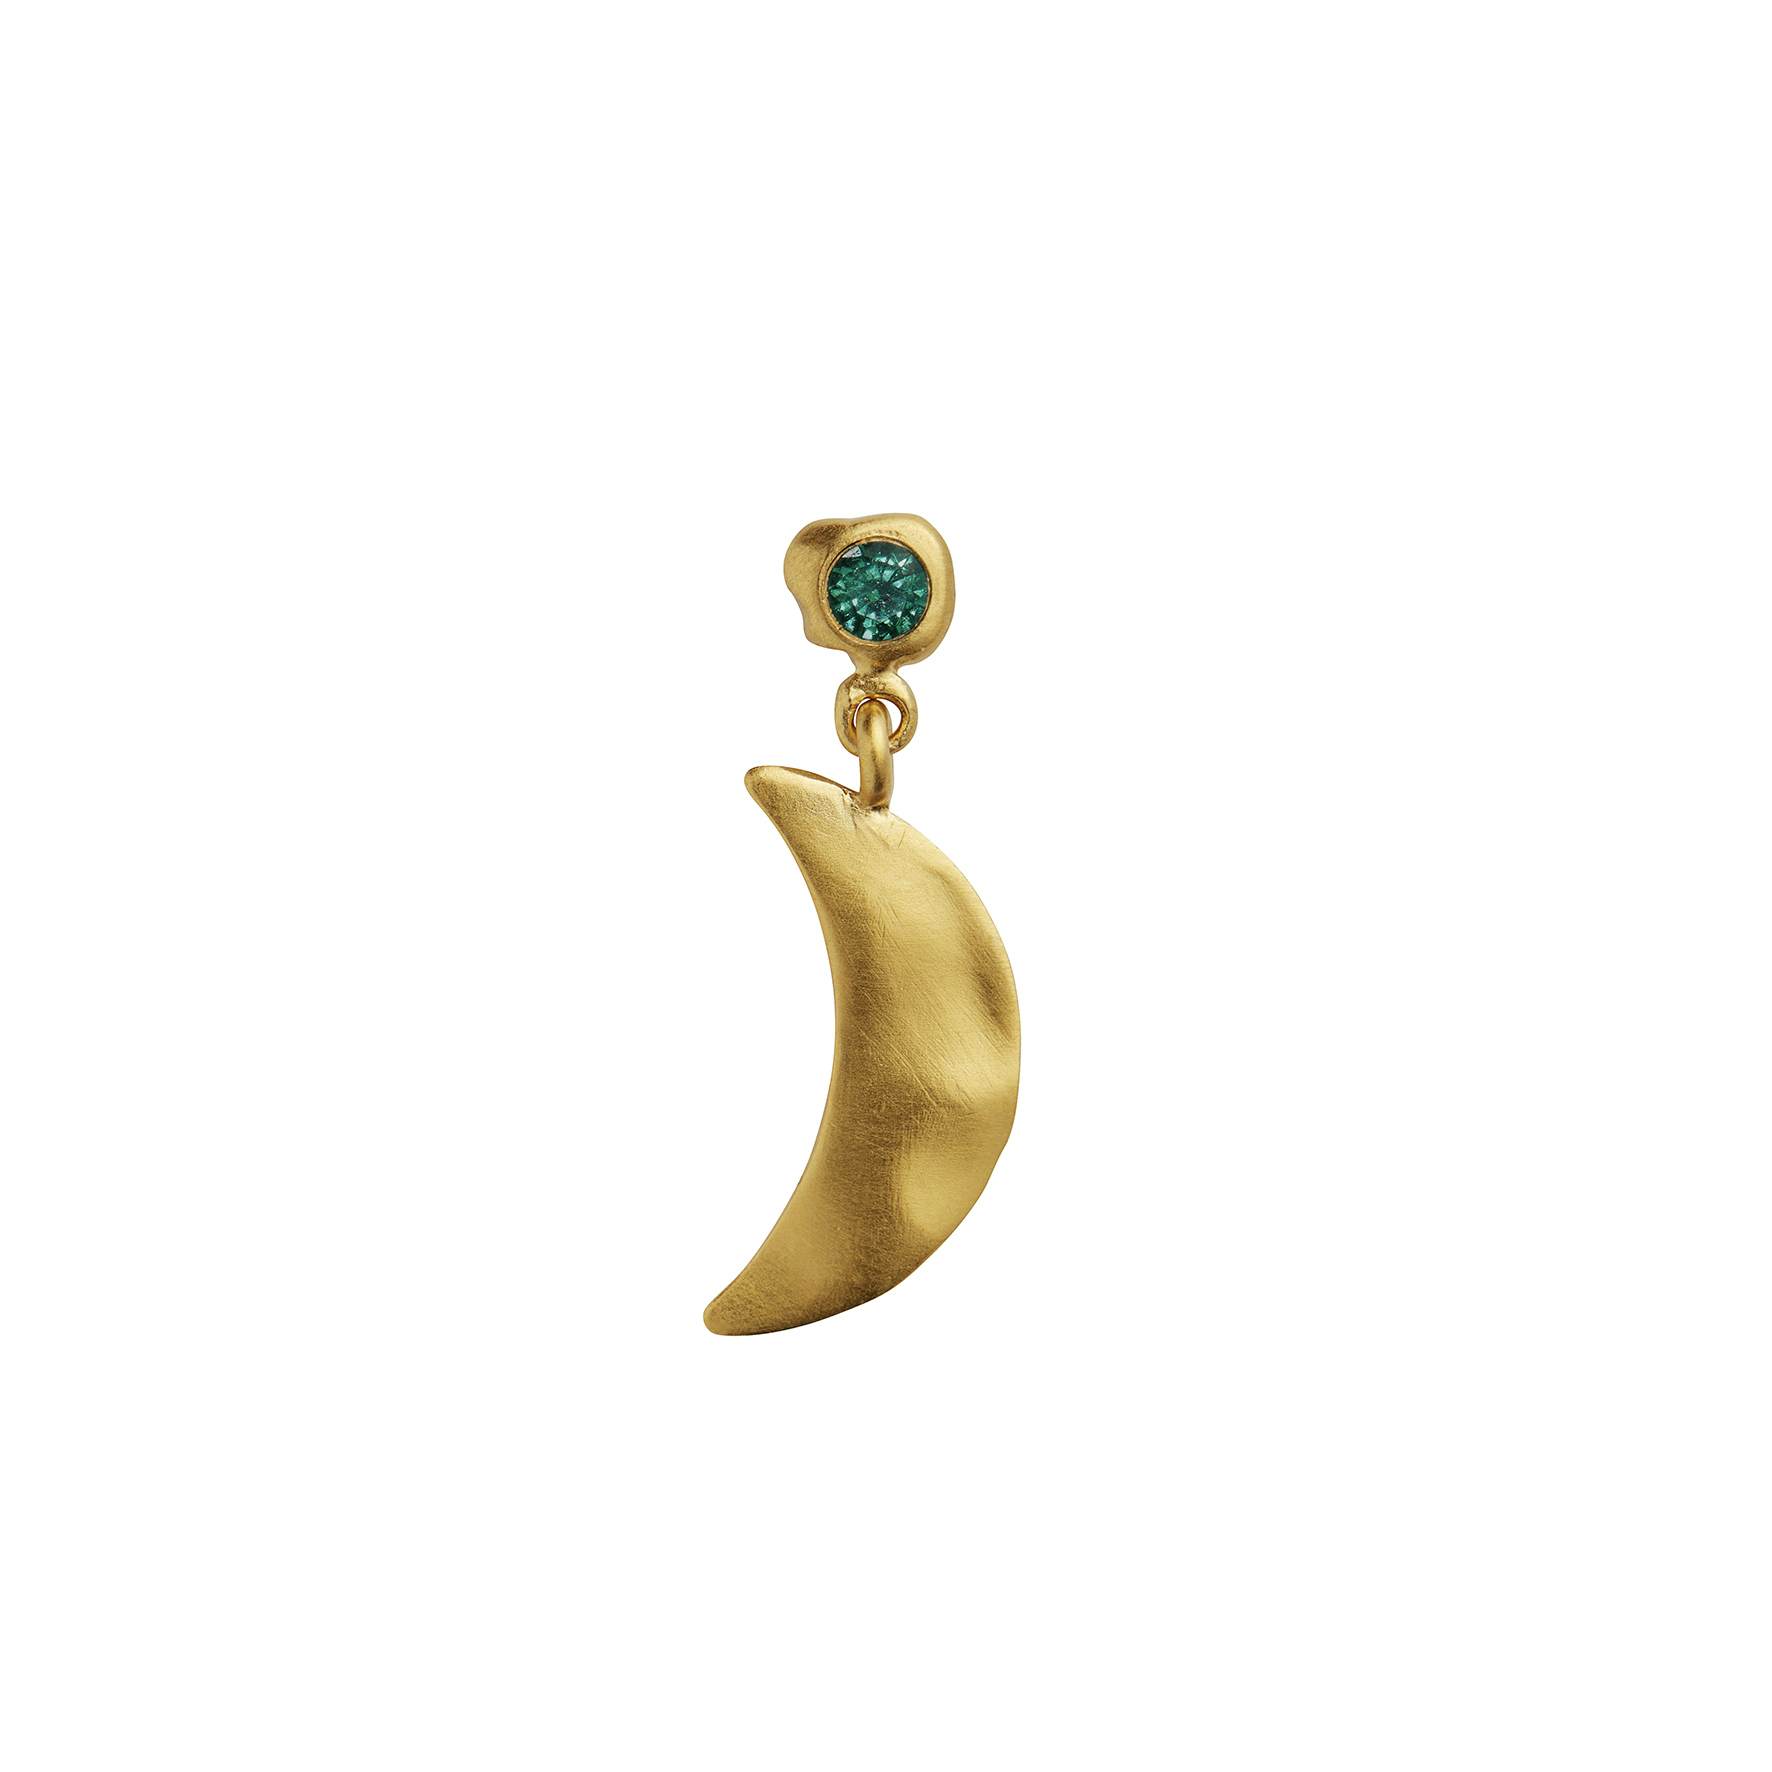 Big Dot Bella Moon with Ocean Green Stone von STINE A Jewelry in Vergoldet-Silber Sterling 925